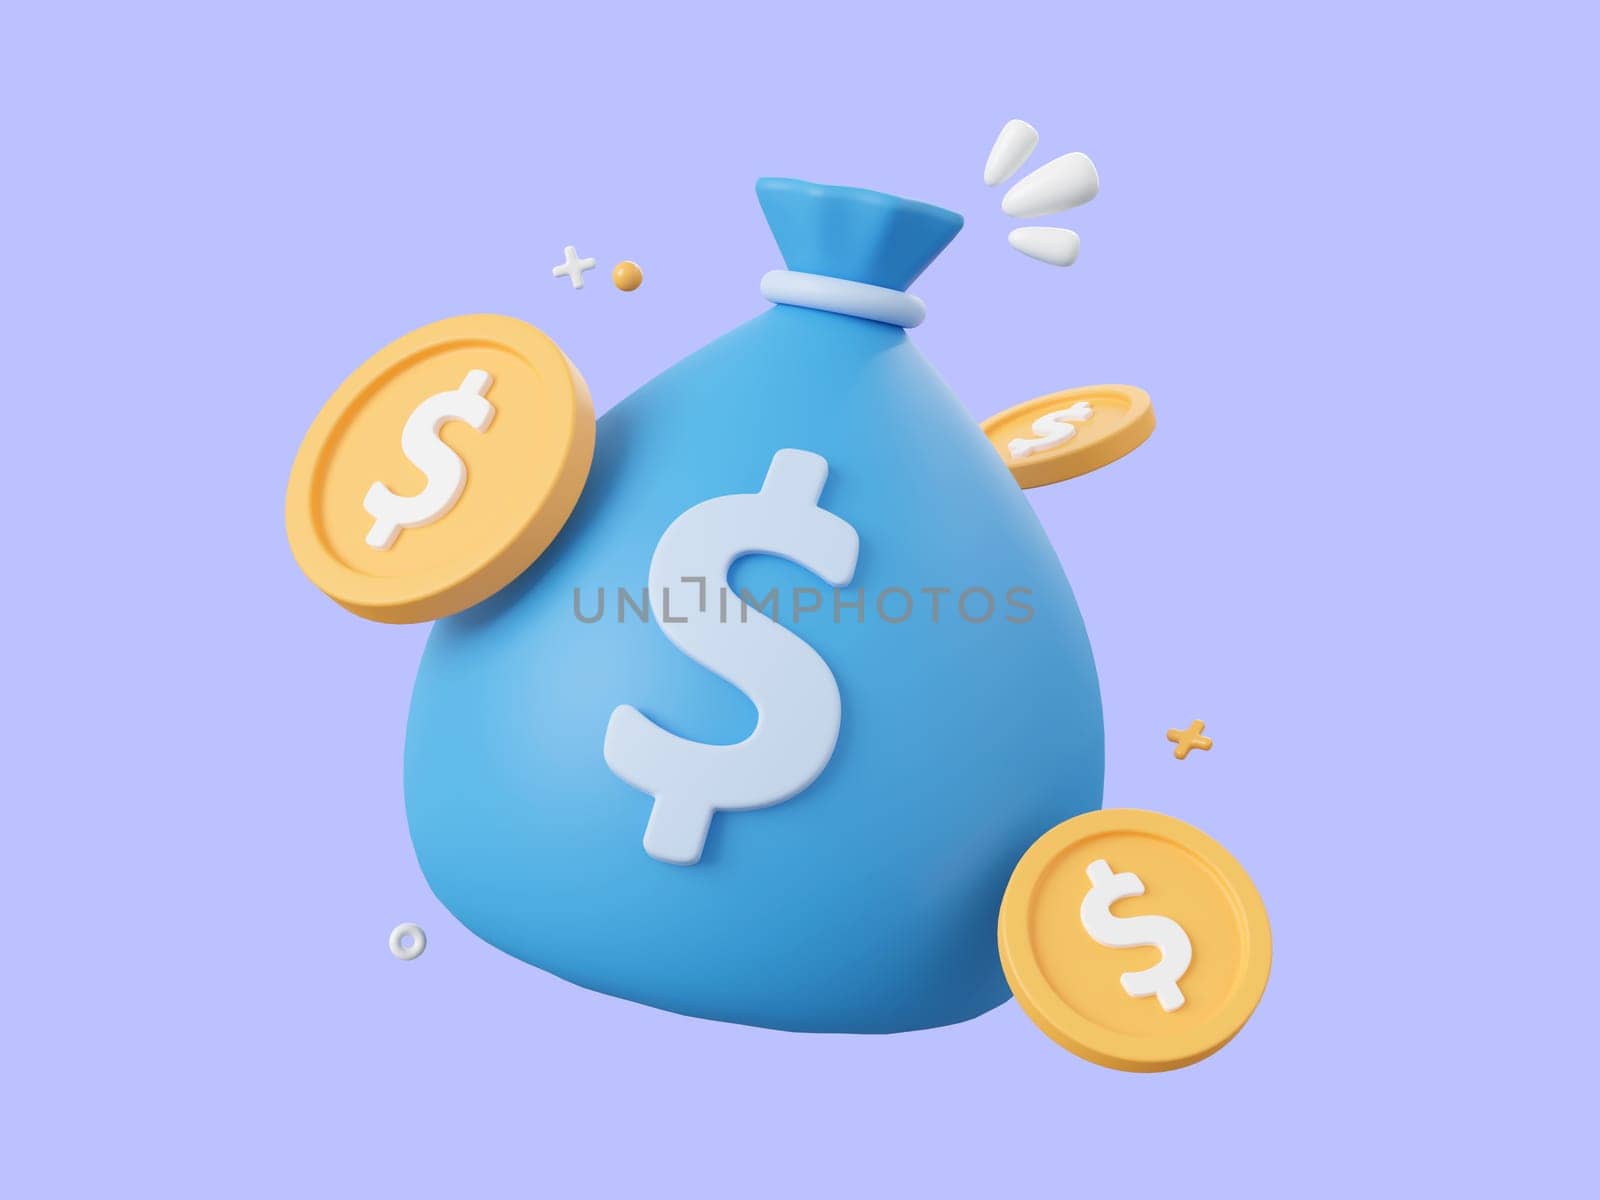 3d cartoon design illustration of Money bag and dollar coin, Money savings concept. by nutzchotwarut